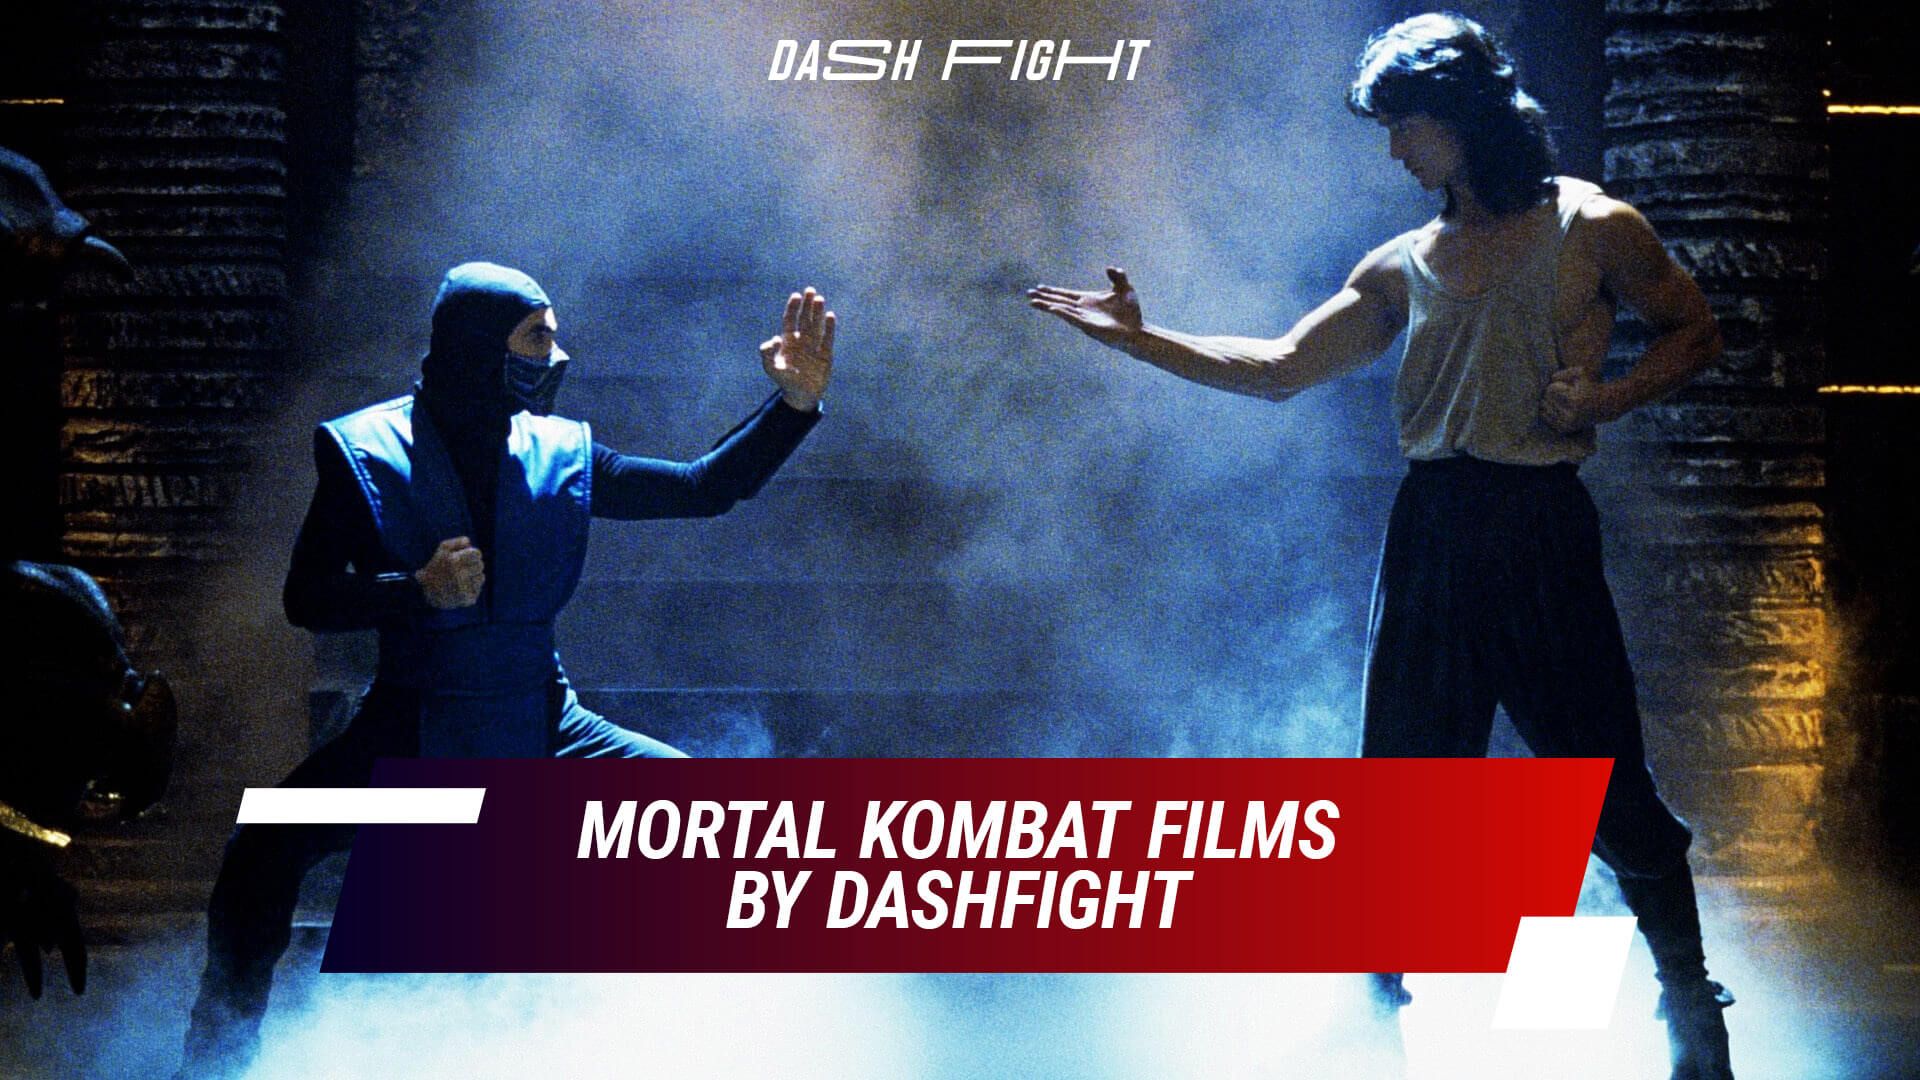 Mortal Kombat. History in movies